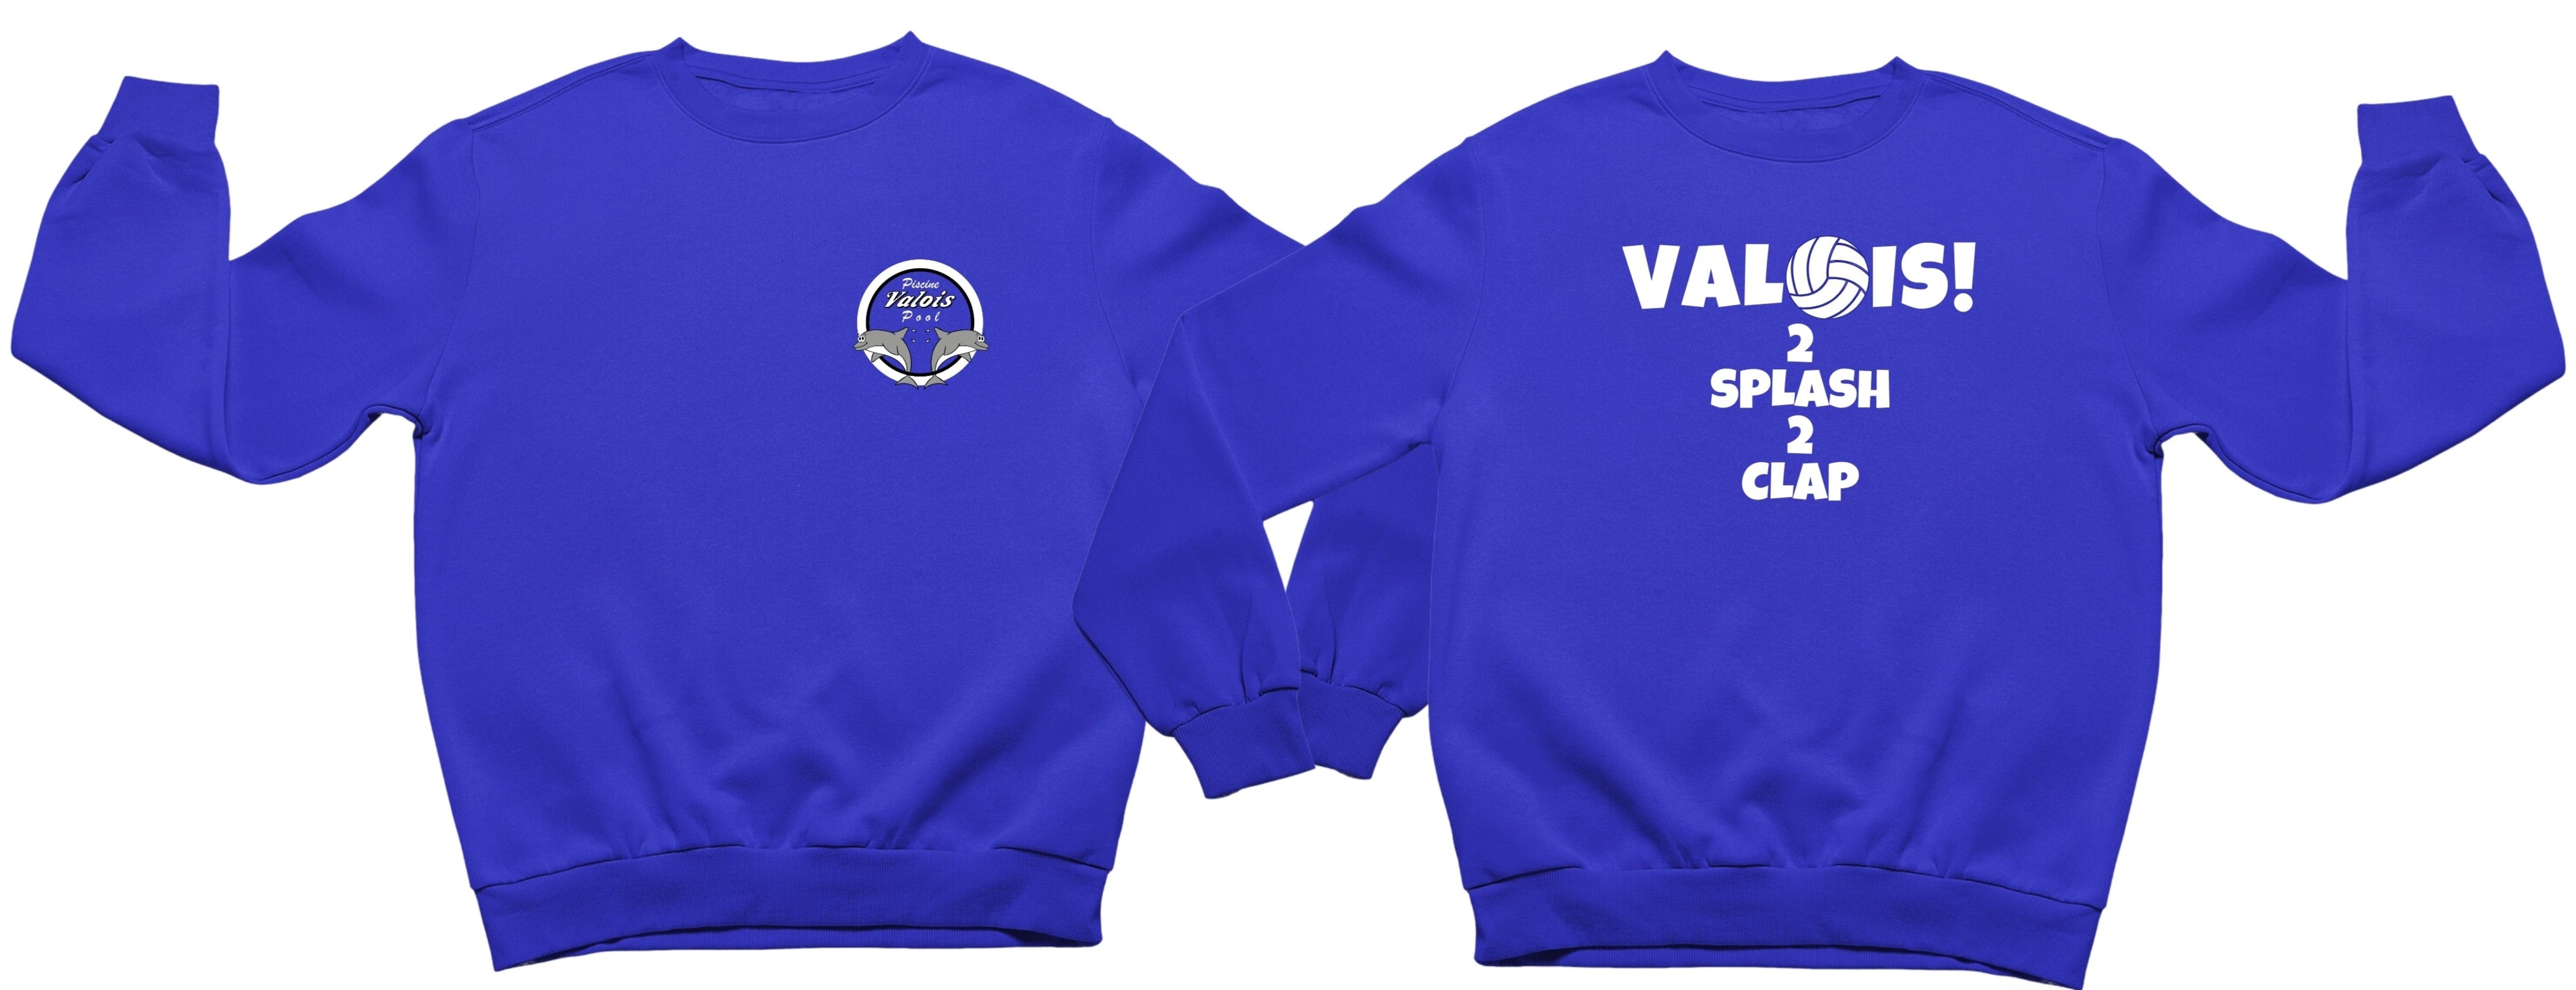 Valois Water Polo Sweatshirts